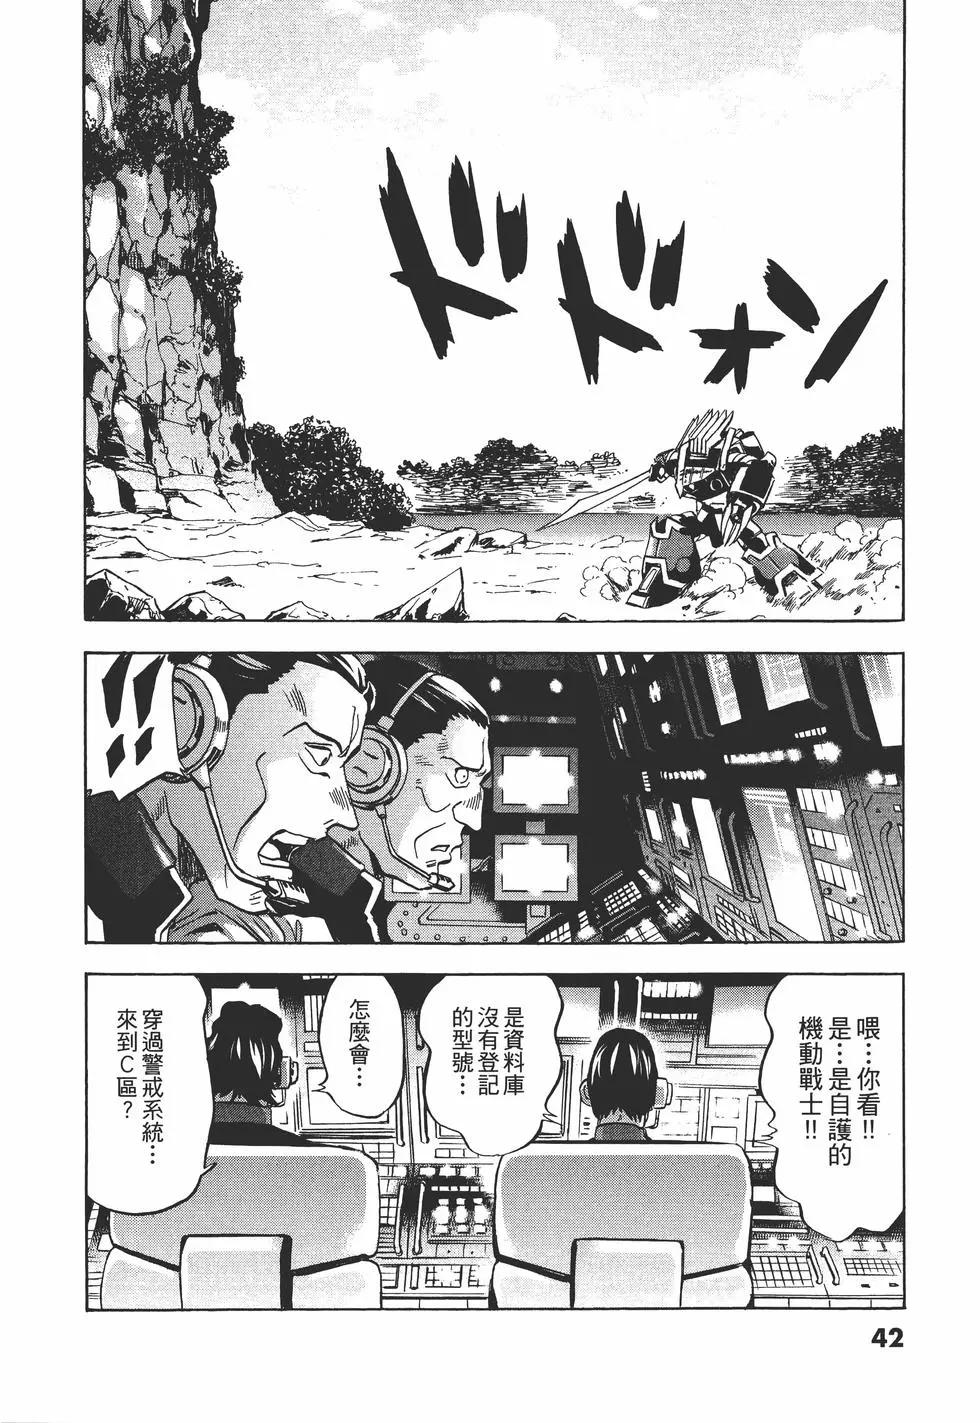 機動戰士高達Aggressor - 第10卷(1/4) - 3